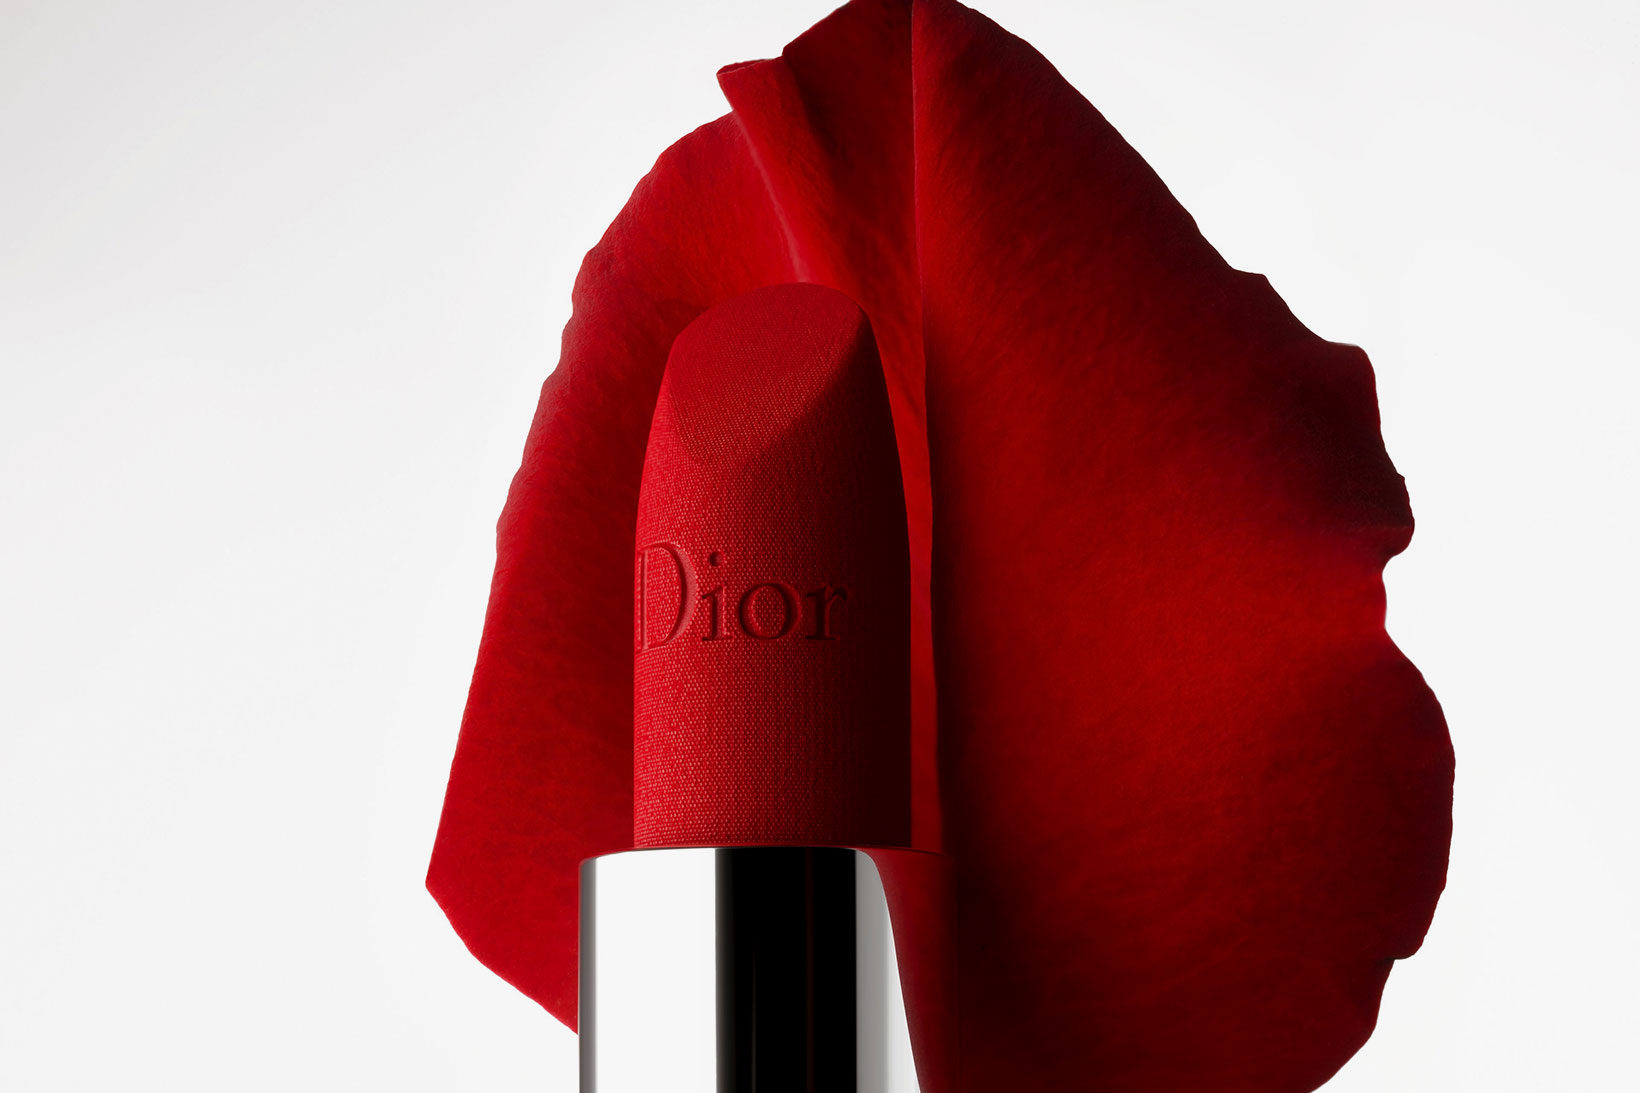 rouge dior satin balm lipsticks makeup skincare peter philips release date 6